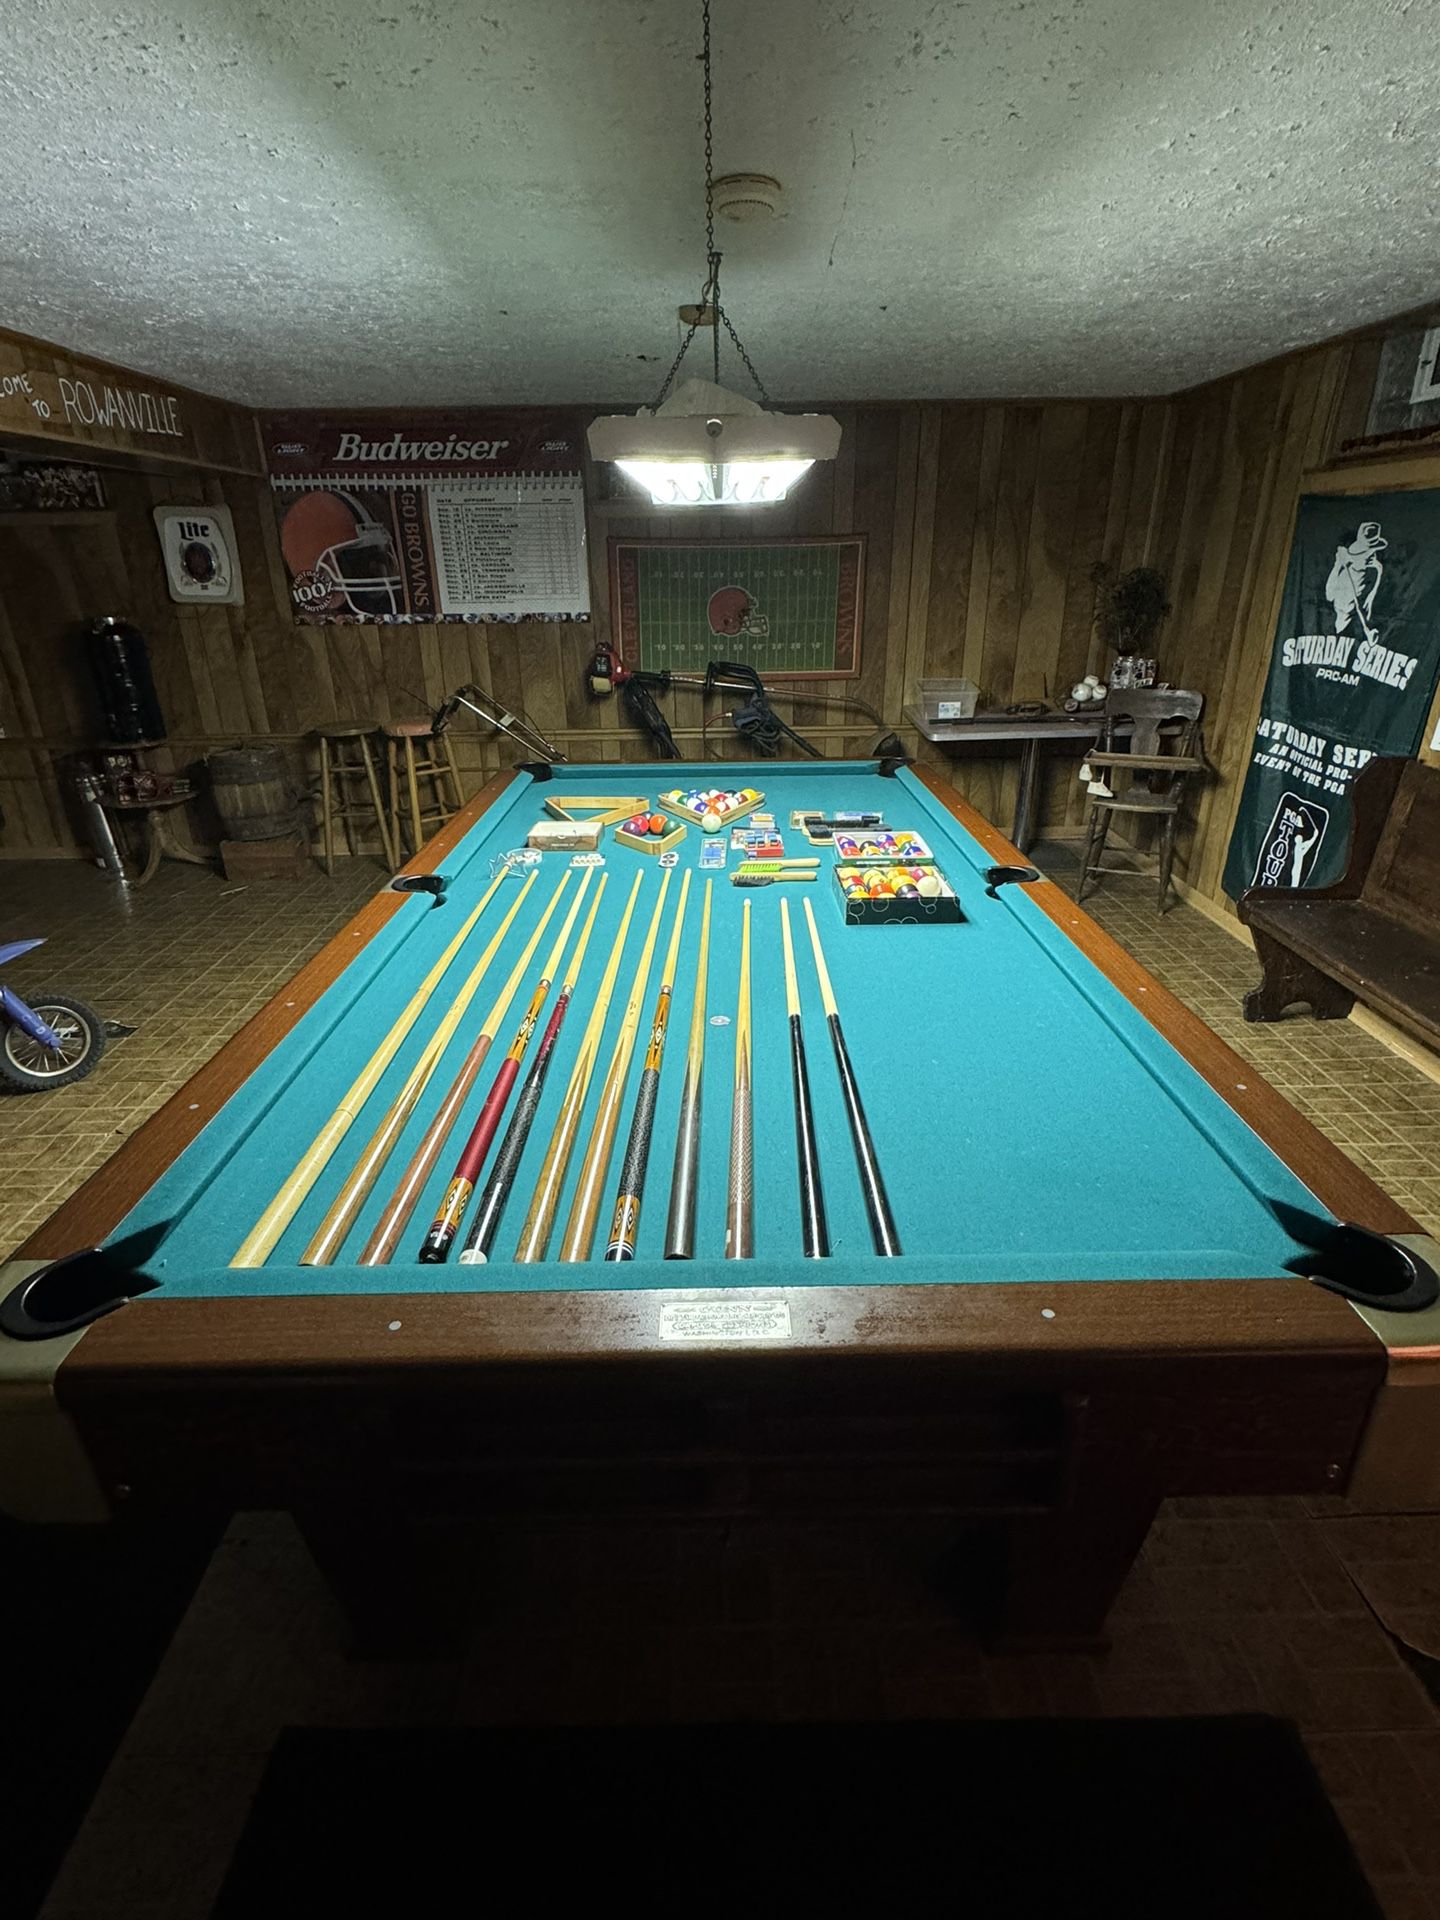 Conn Billiard & Bowling Supply Pool Table 9’